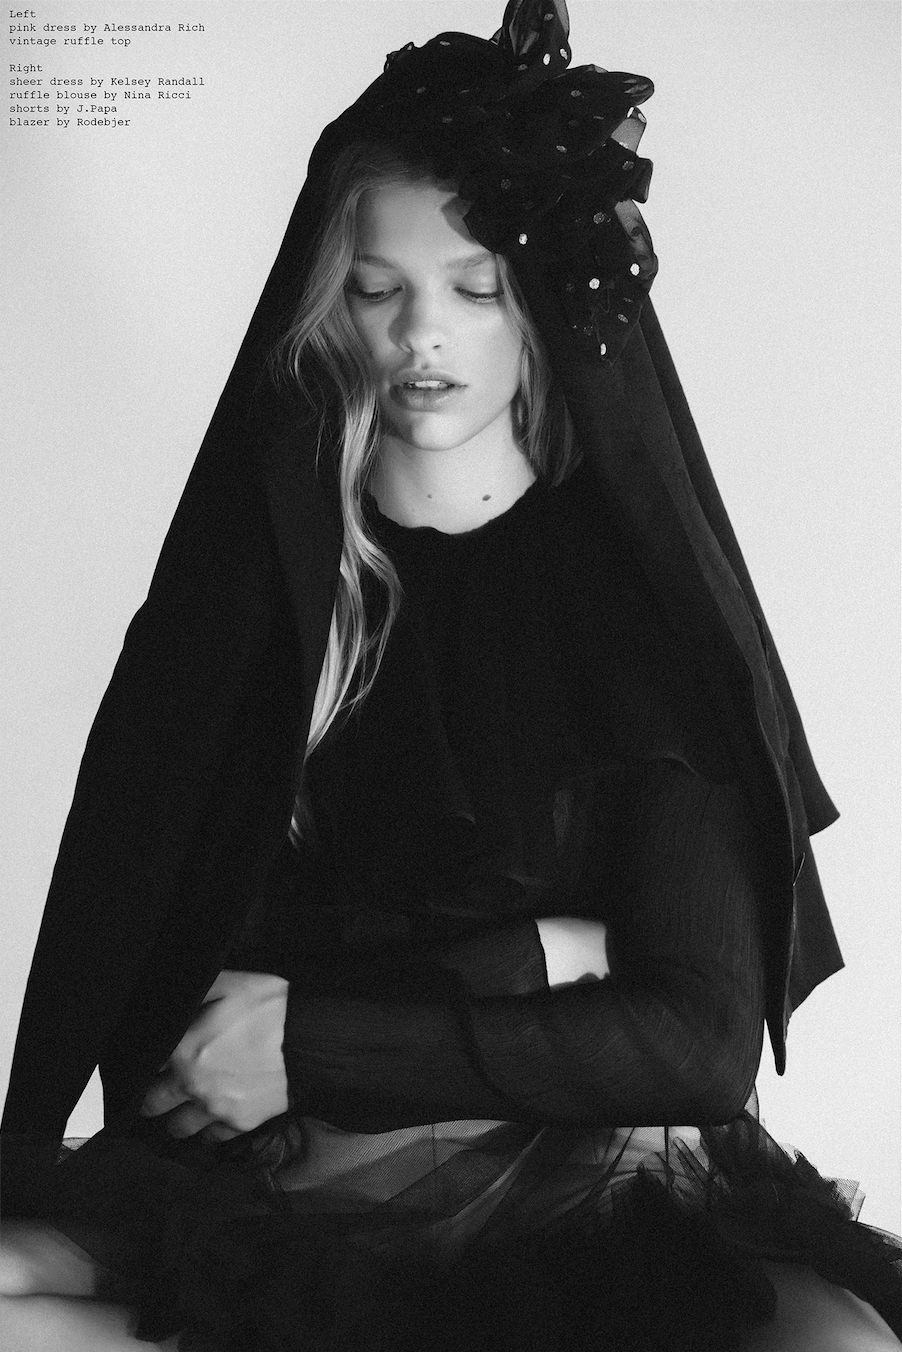 Copy of syn magazine kelsey randall emerging designer made-to-measure fashion editorial custom bespoke sheer black tulle cloud dress ruffle puff hem